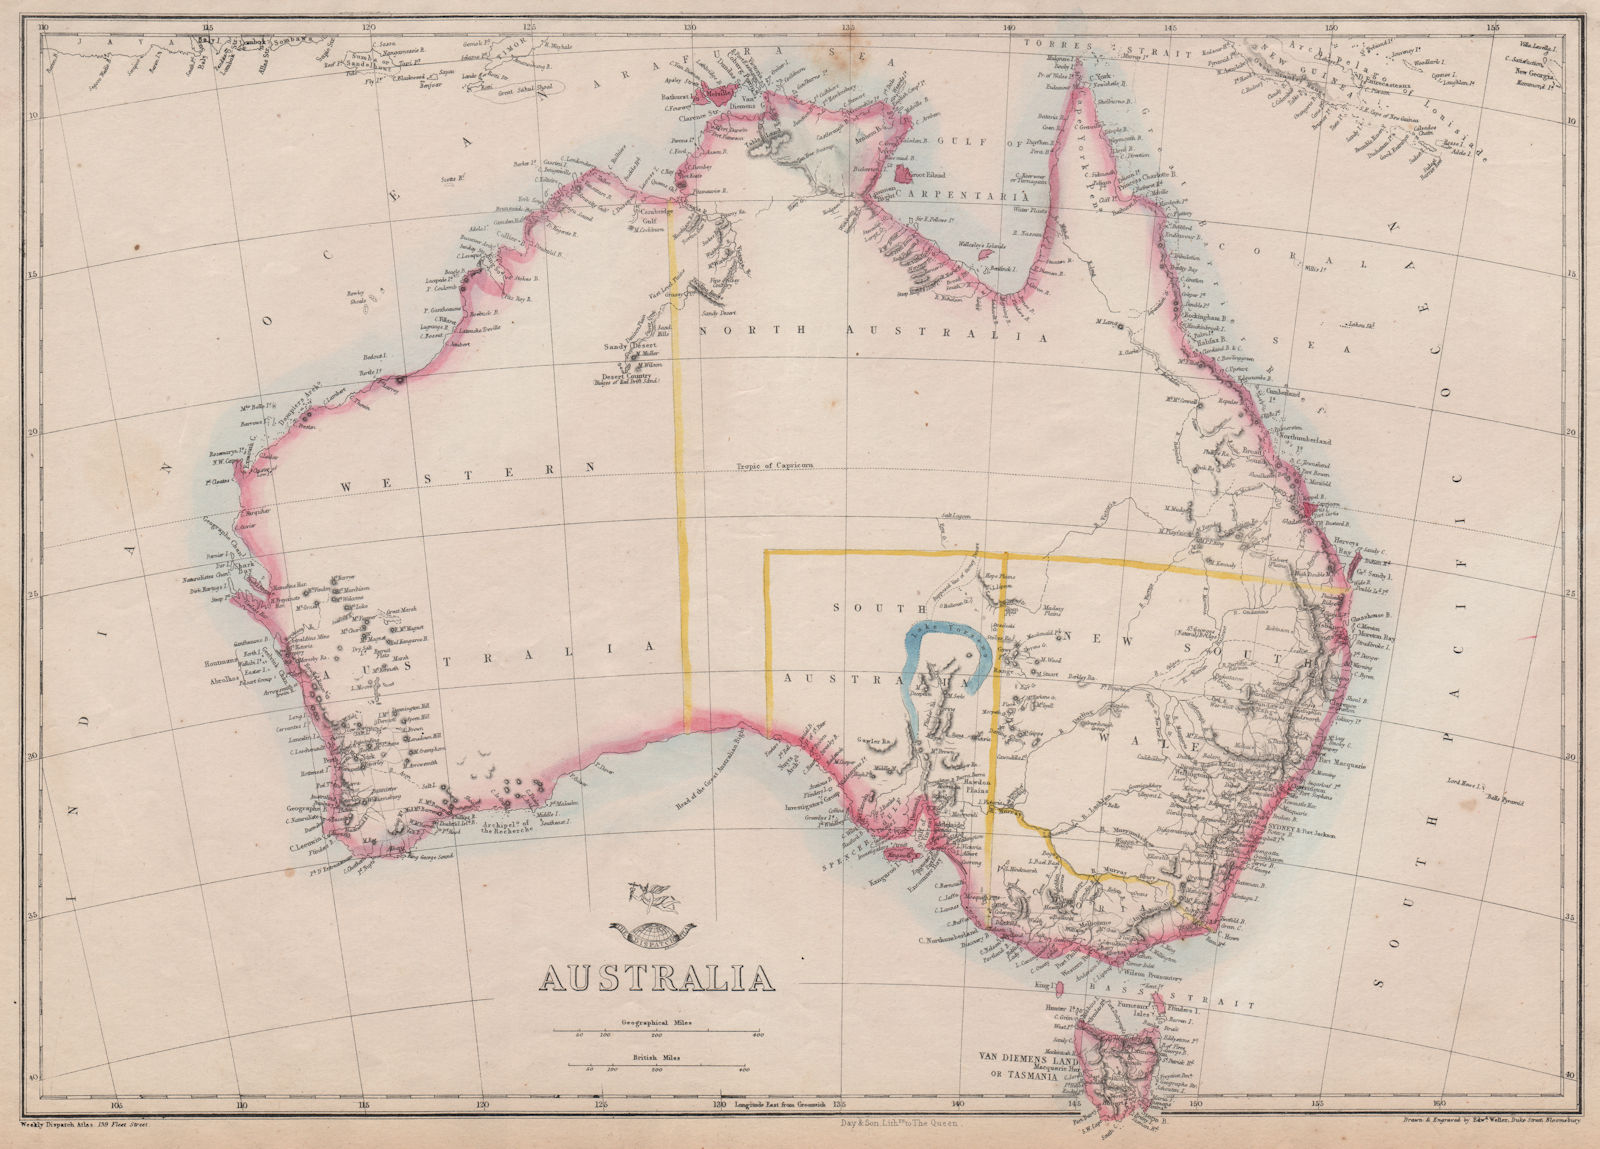 AUSTRALIA showing 1856 states pre-Queensland 'North Australia'. WELLER 1863 map